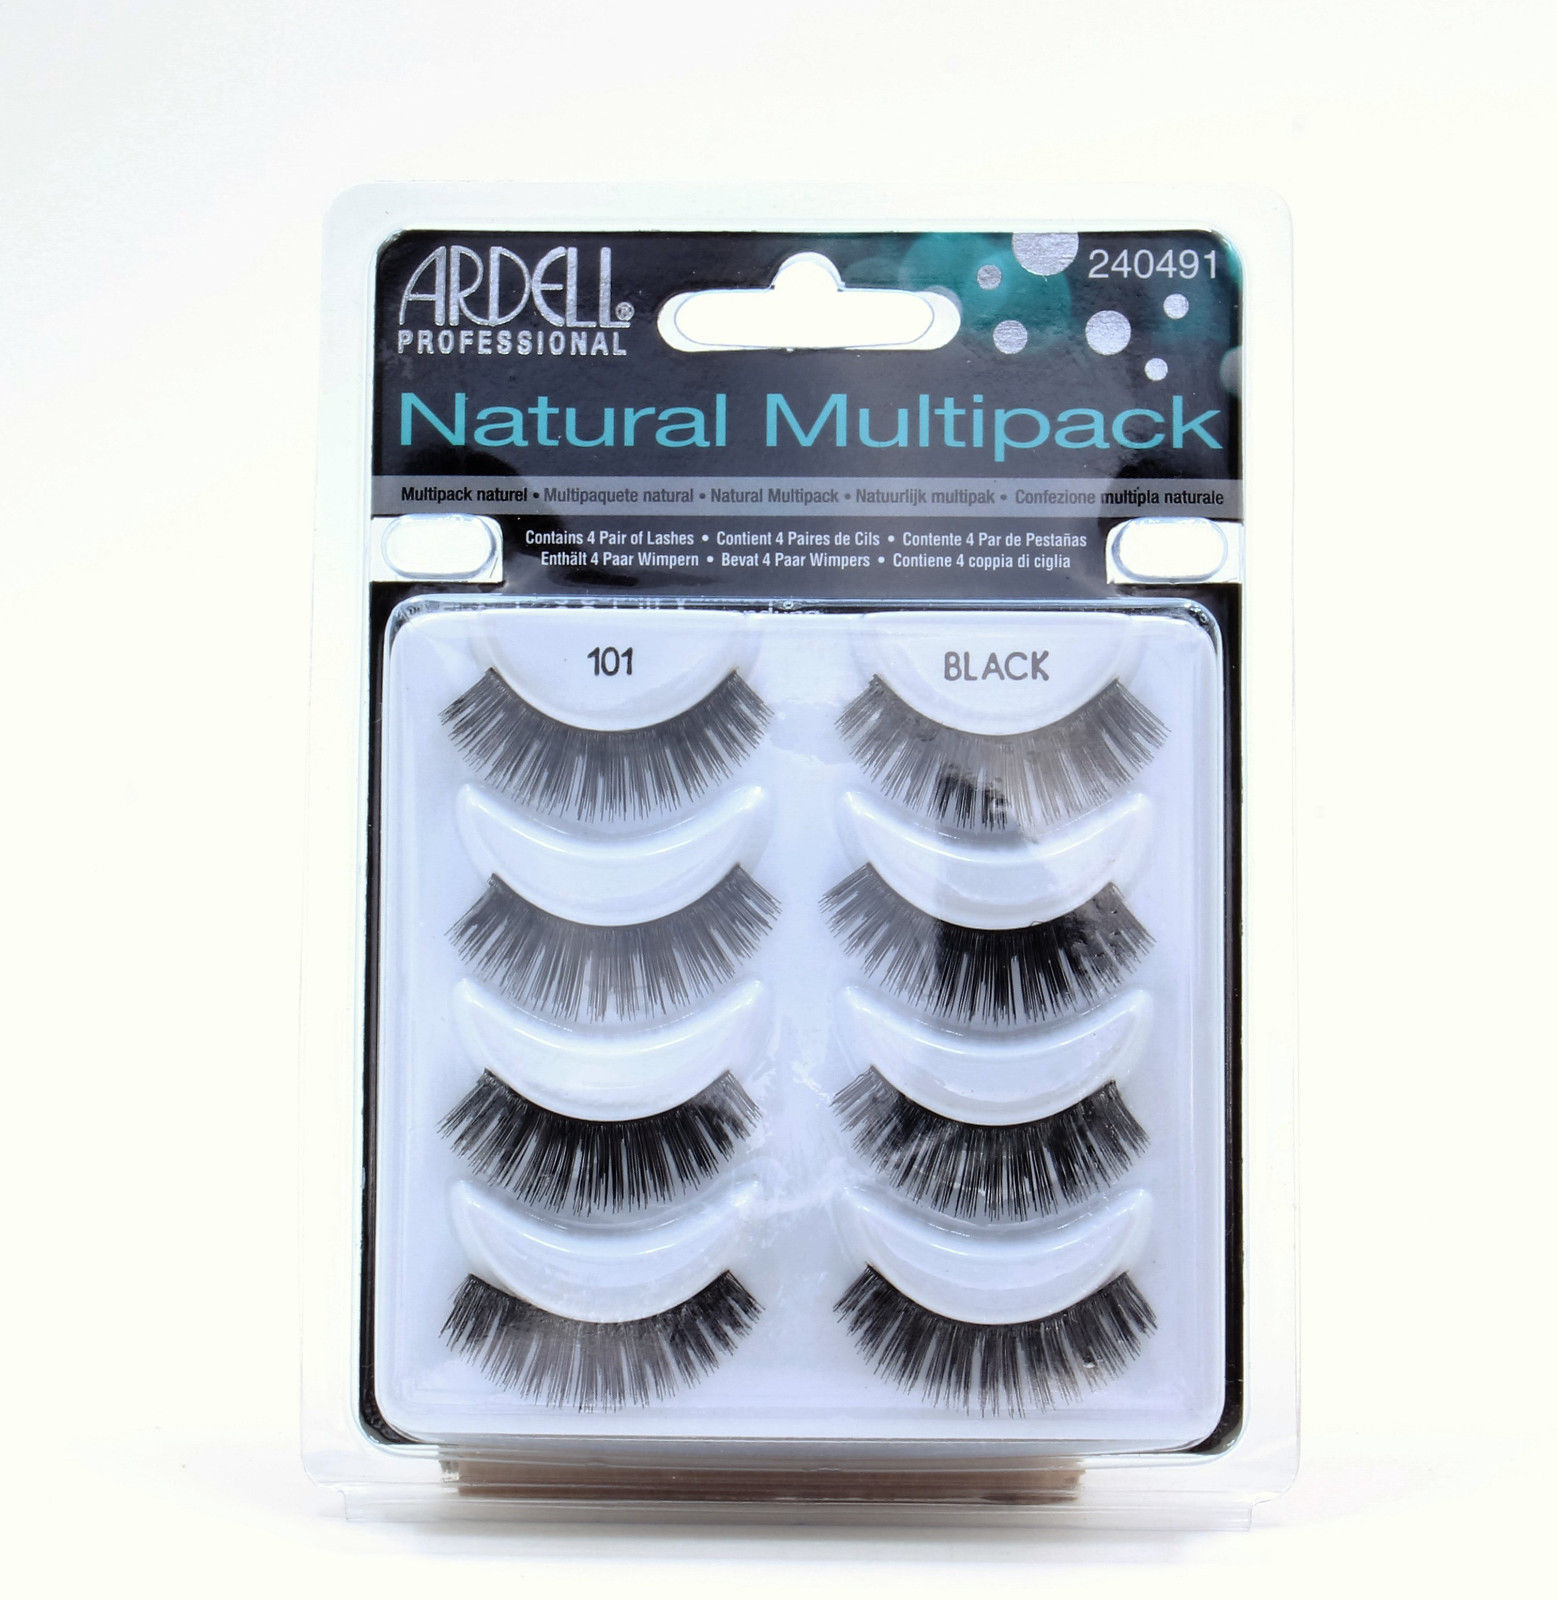 ARDELL #101 Demi Natural Multipack False Eyelashes #240491, Select Set